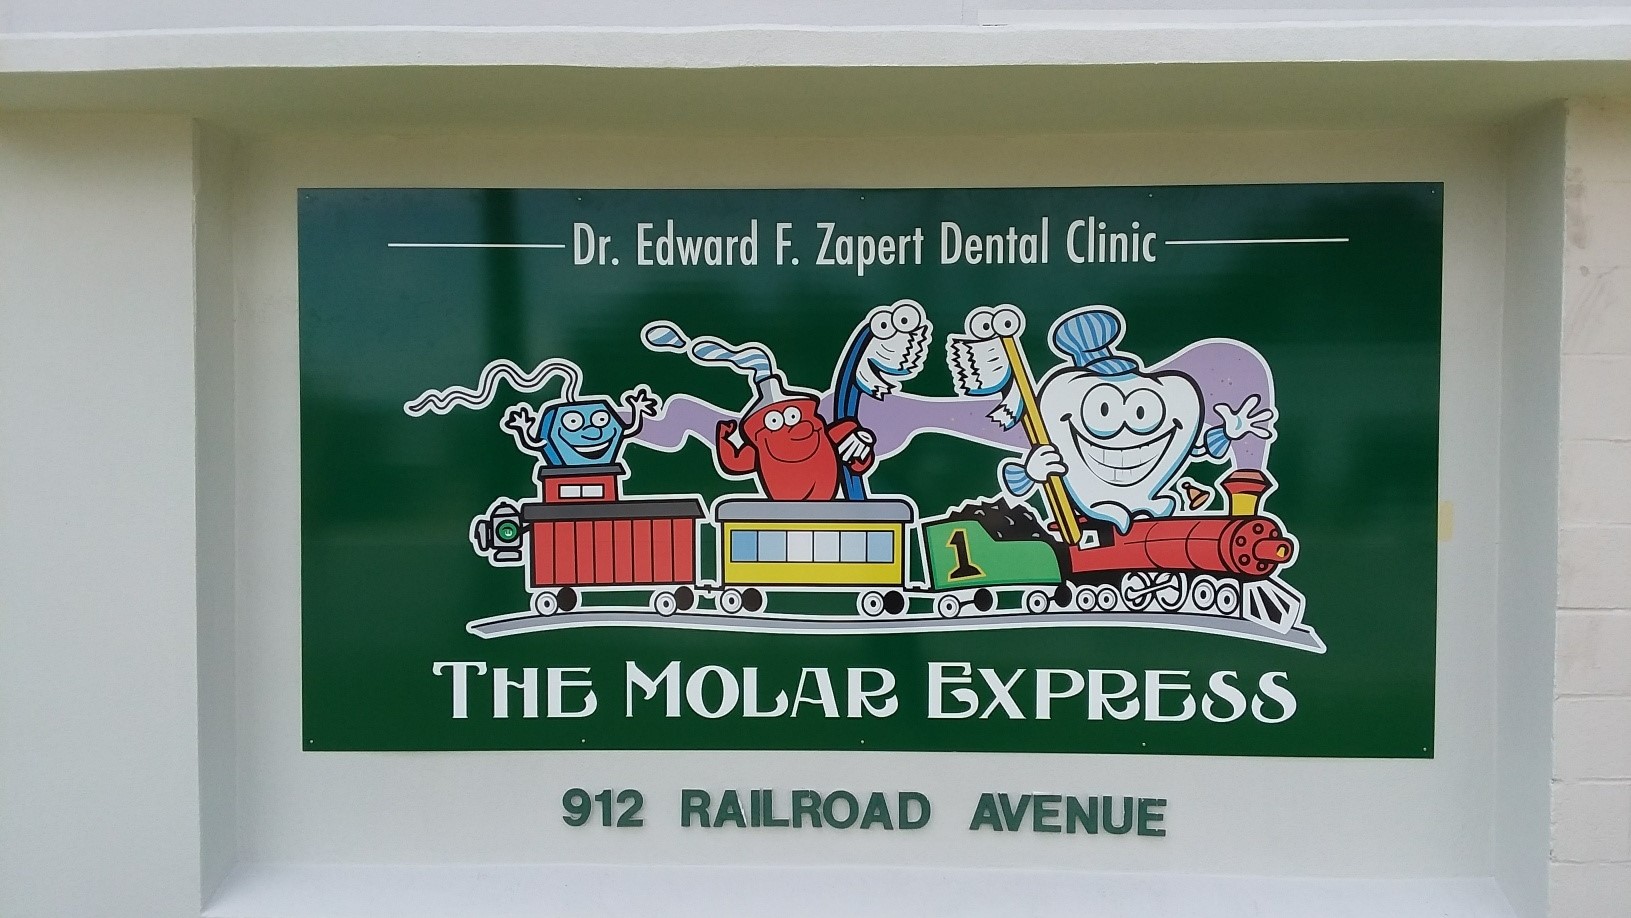 Dr. Edward F. Zapert Dental Clinic